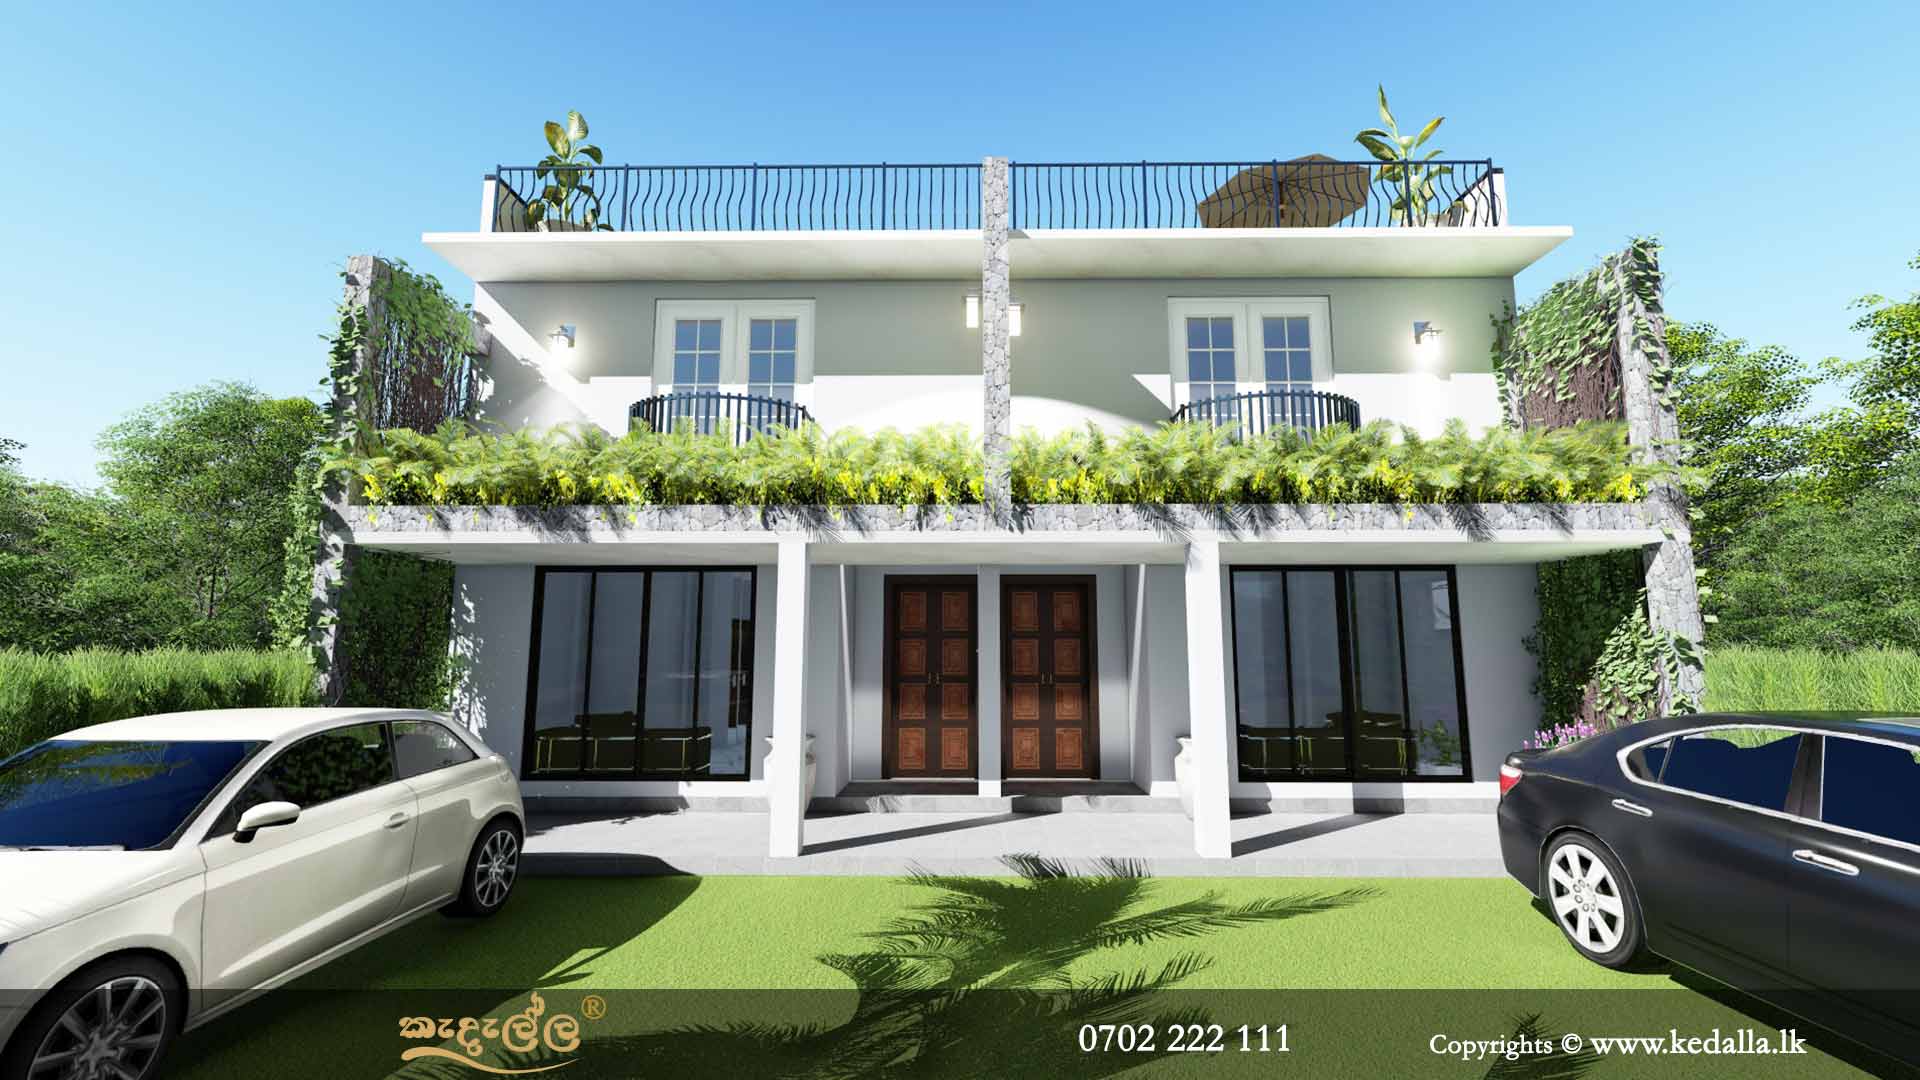 Amazing impressive and beautiful modern house designs, Stunning locations, landscaping Design in Kandy sri lanka